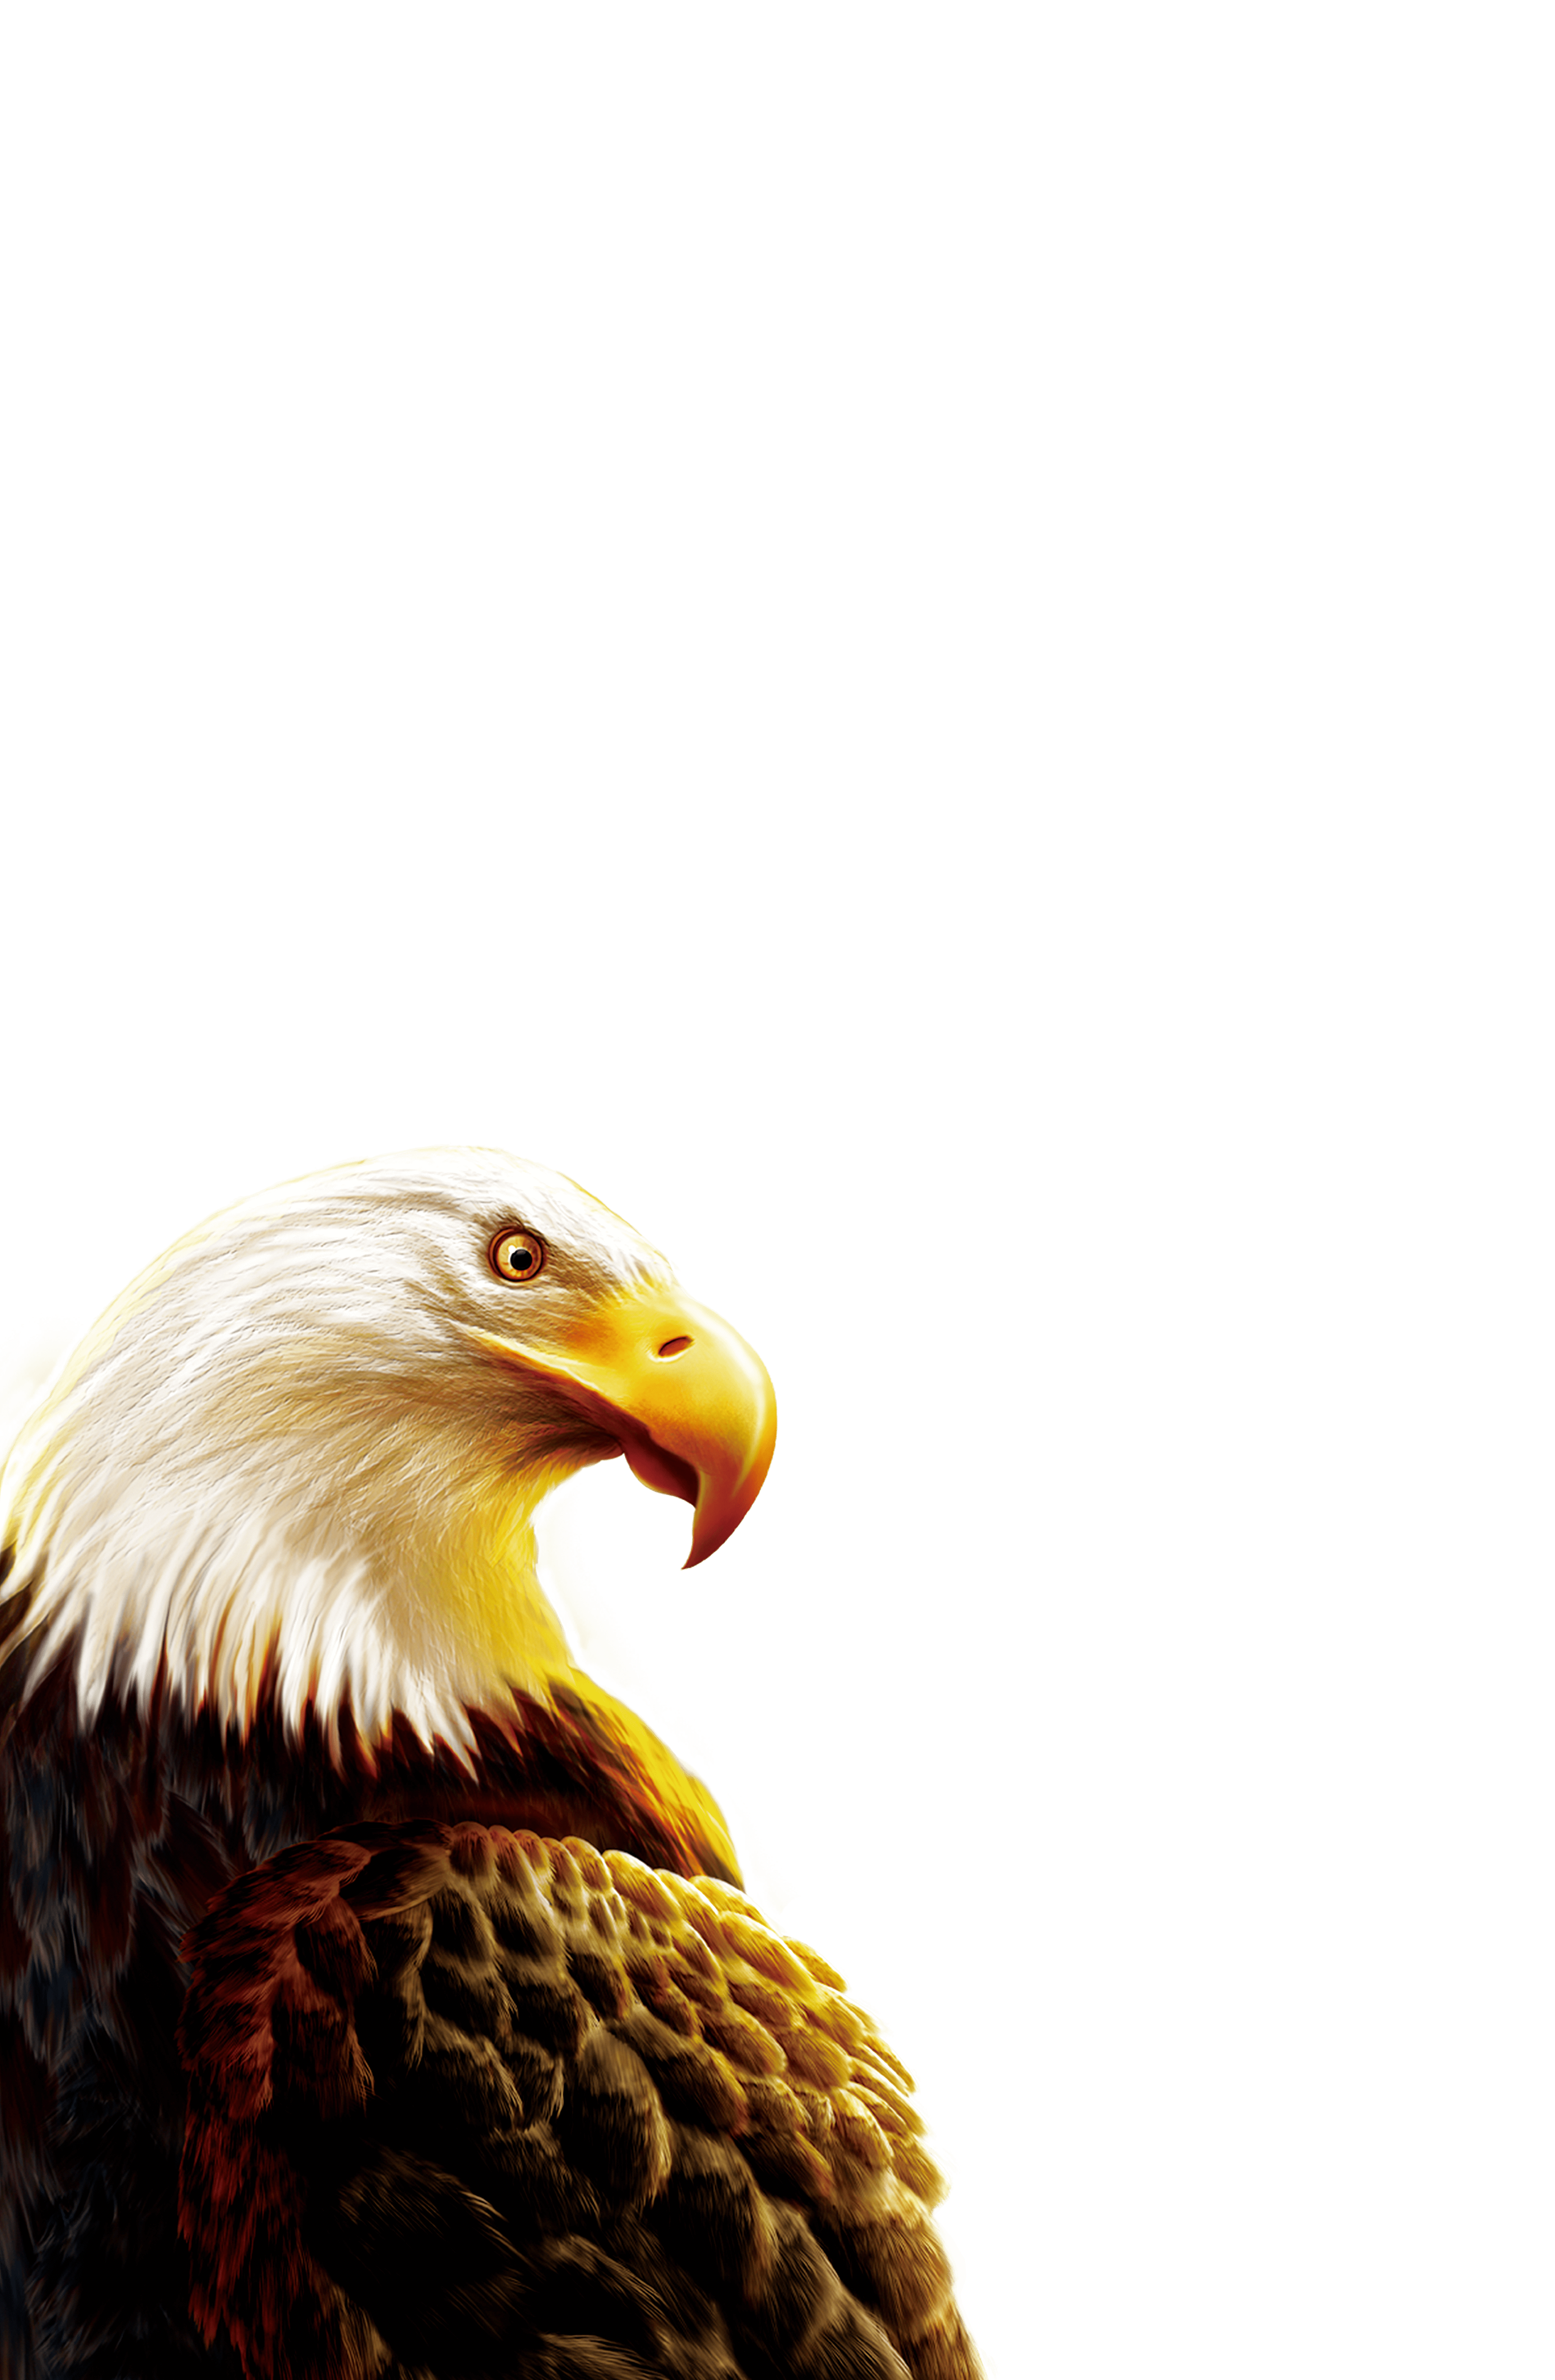 Eagle PNG Background – Free Download